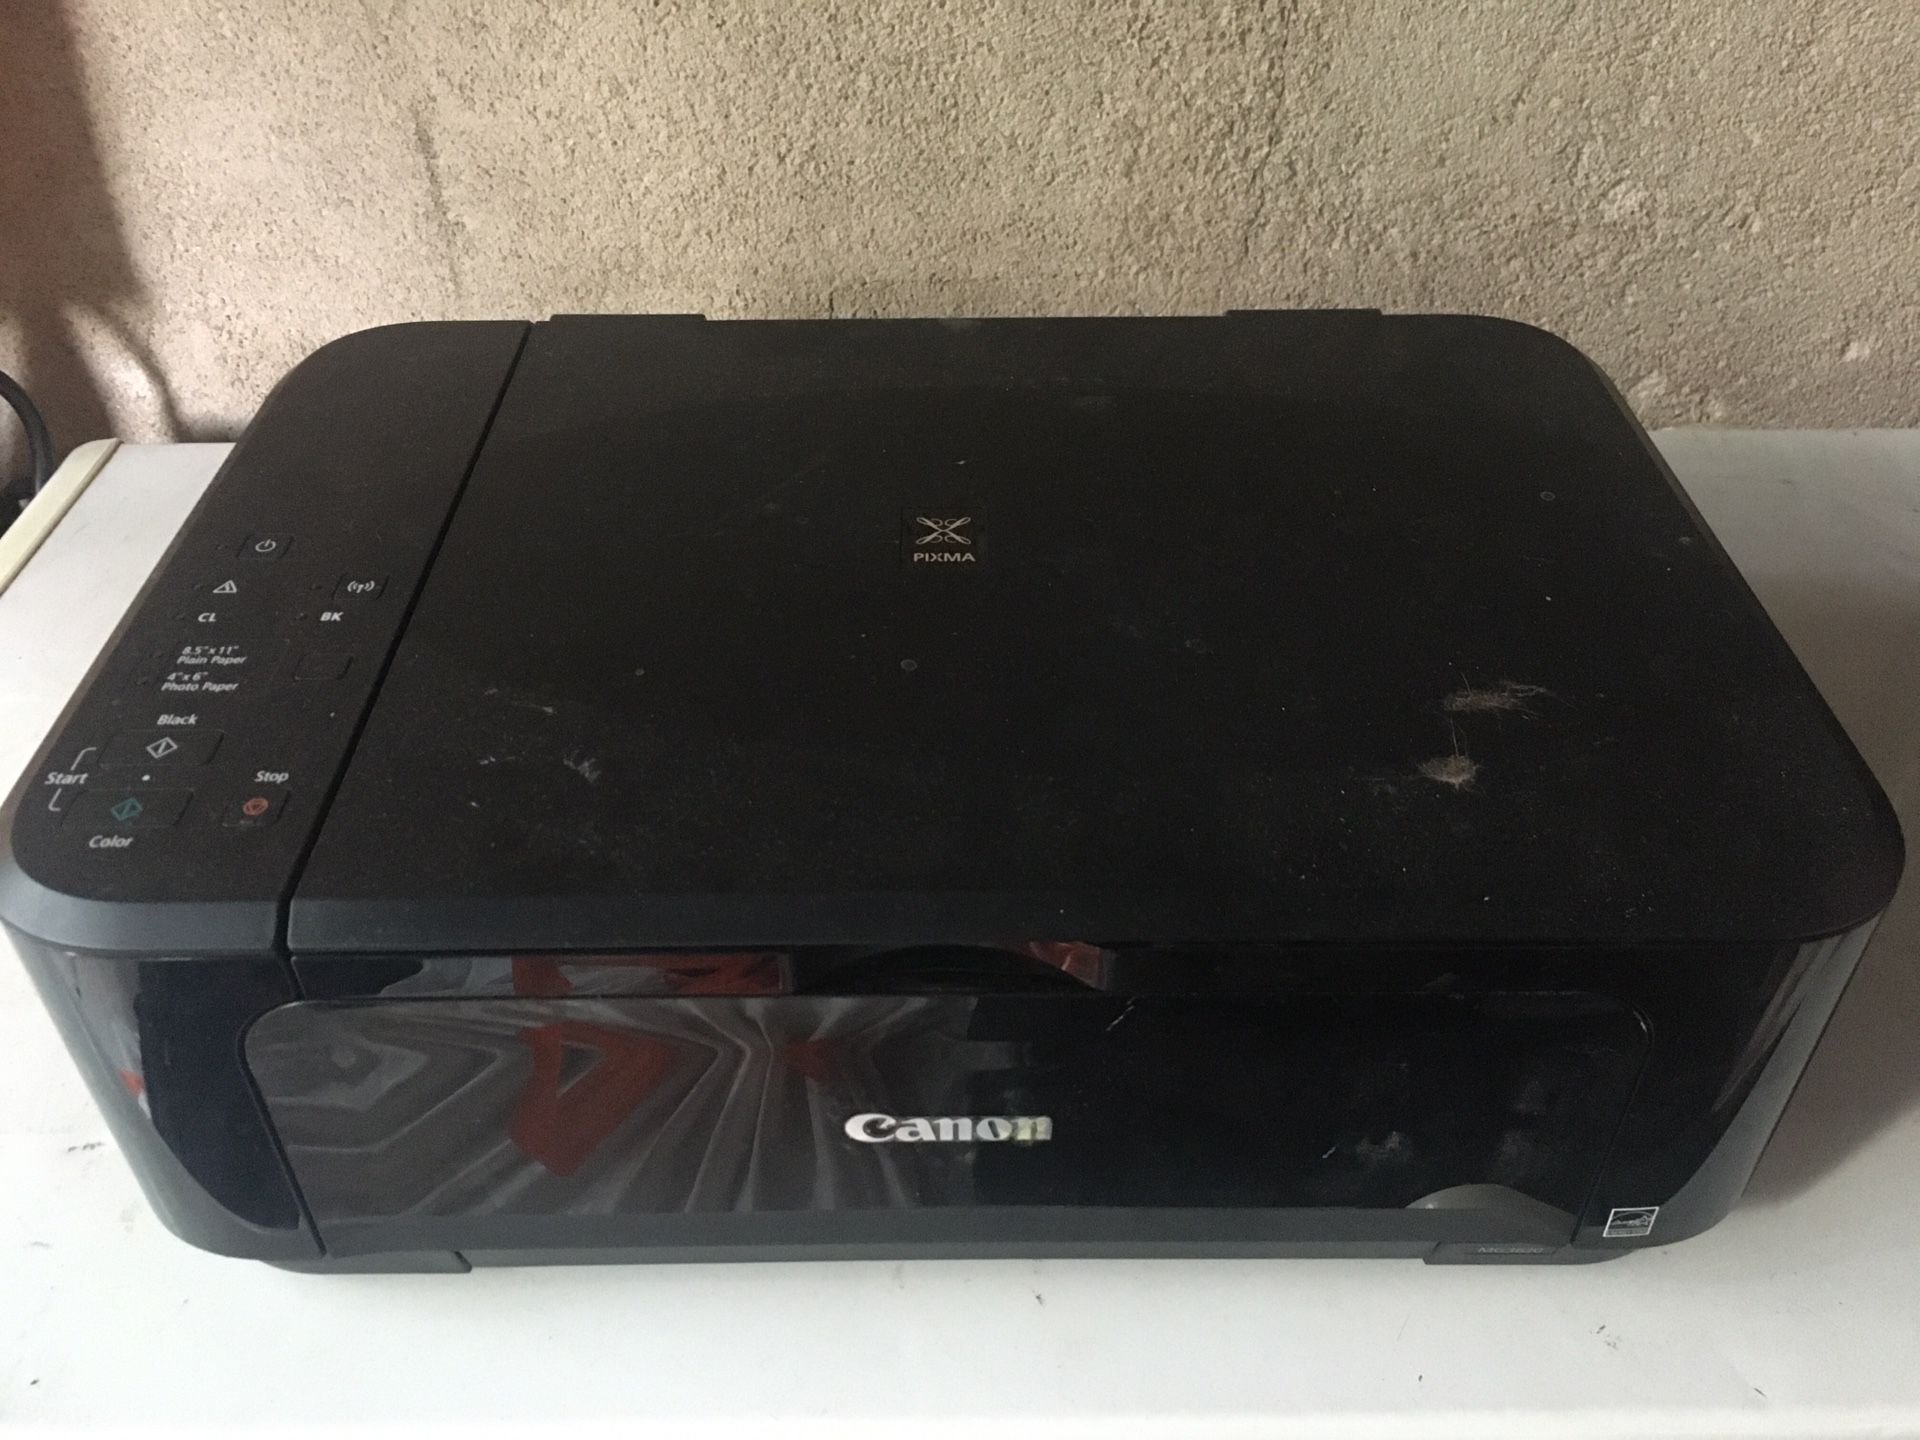 Canon Pixma wireless inkjet all in one printer